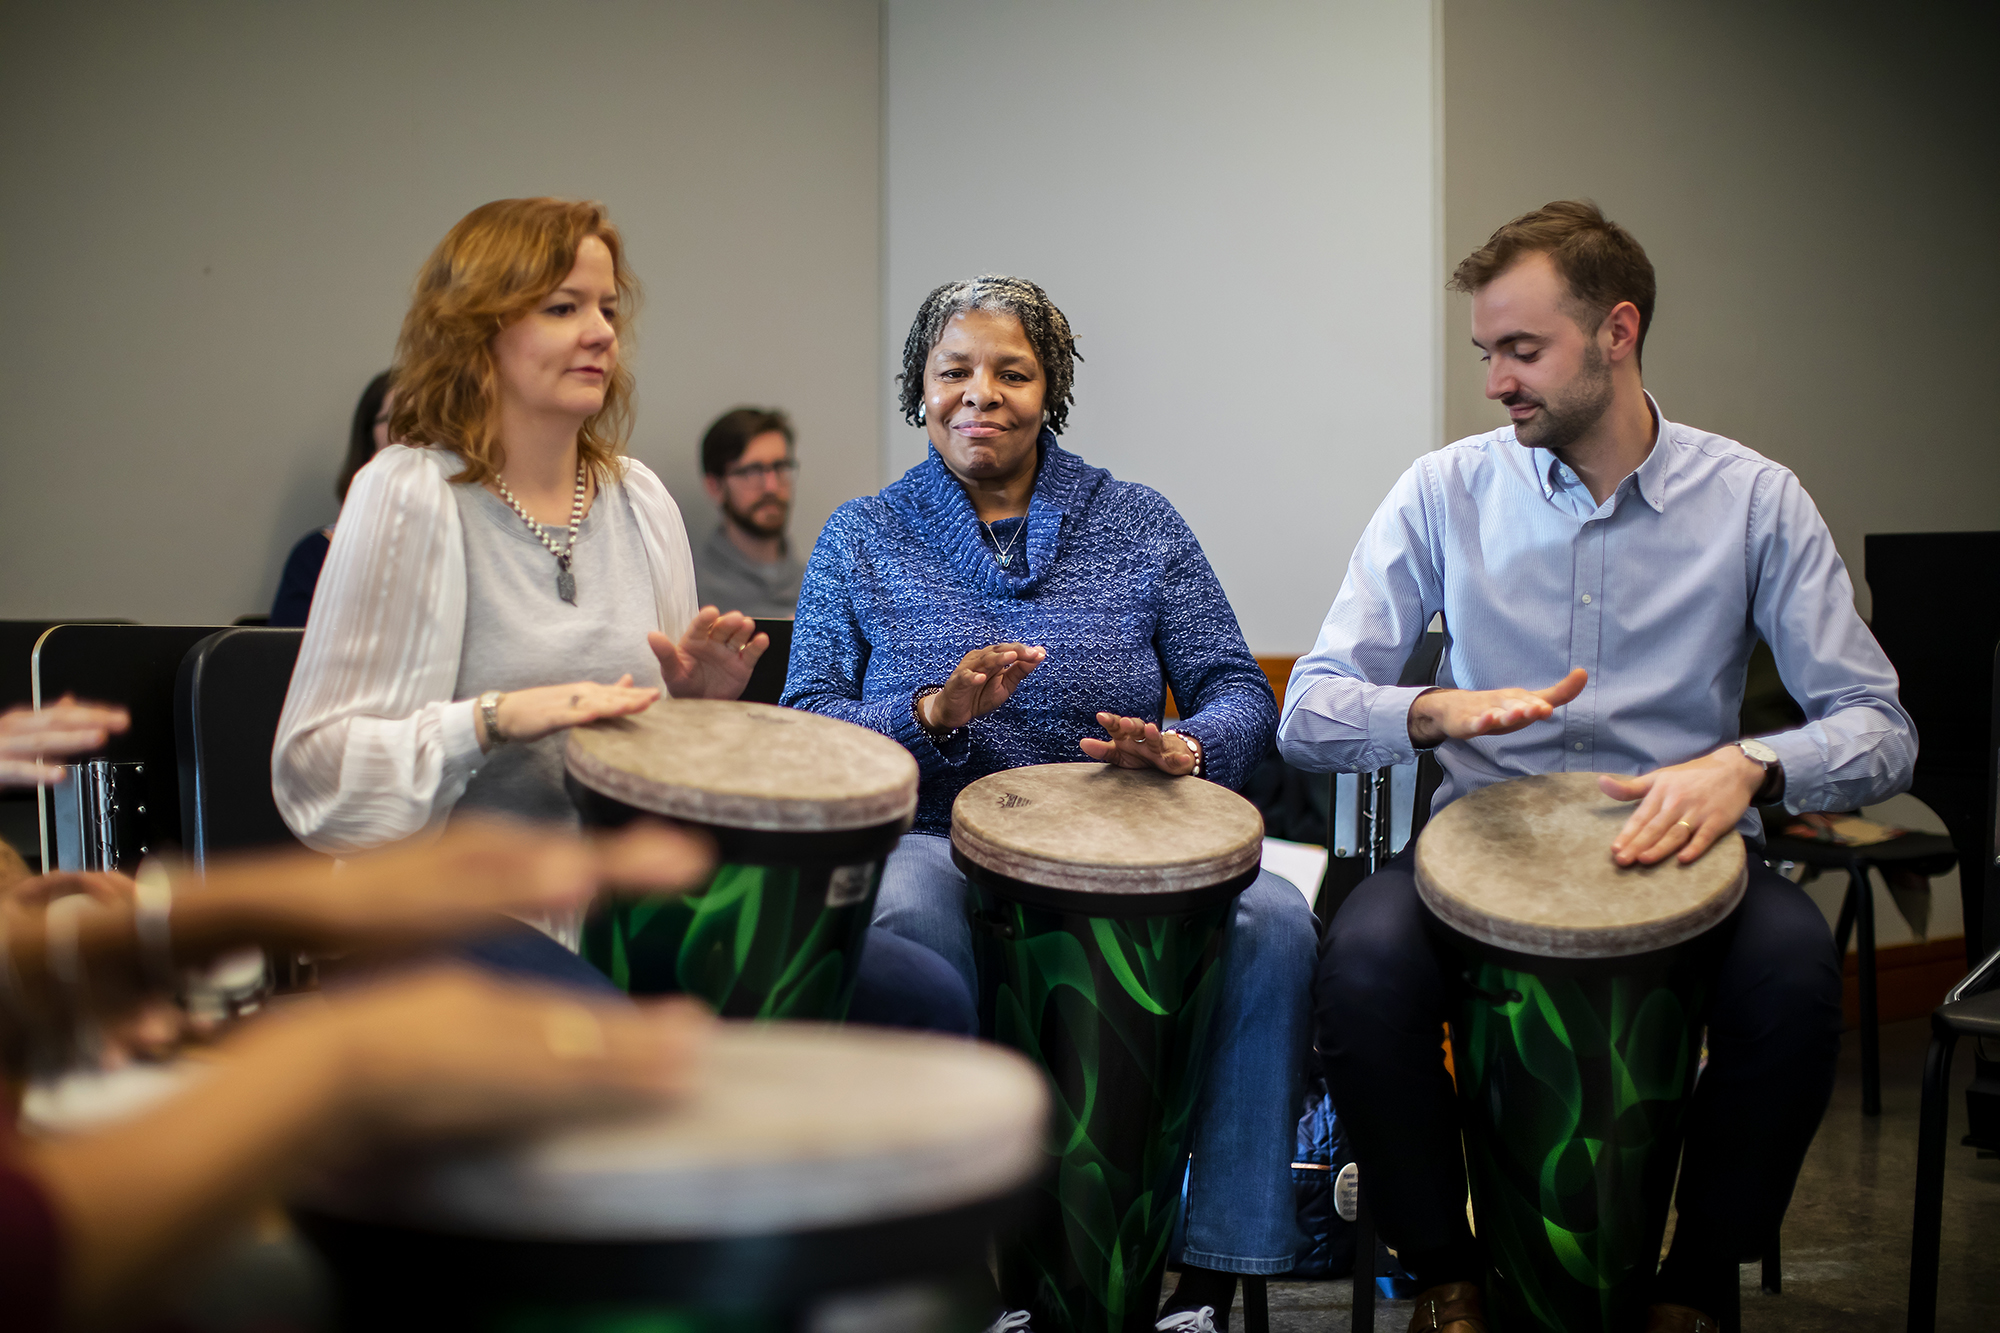  A Creative Expression Through Music drum circle. Photo by Eric Sucar/Penn University Communications. 